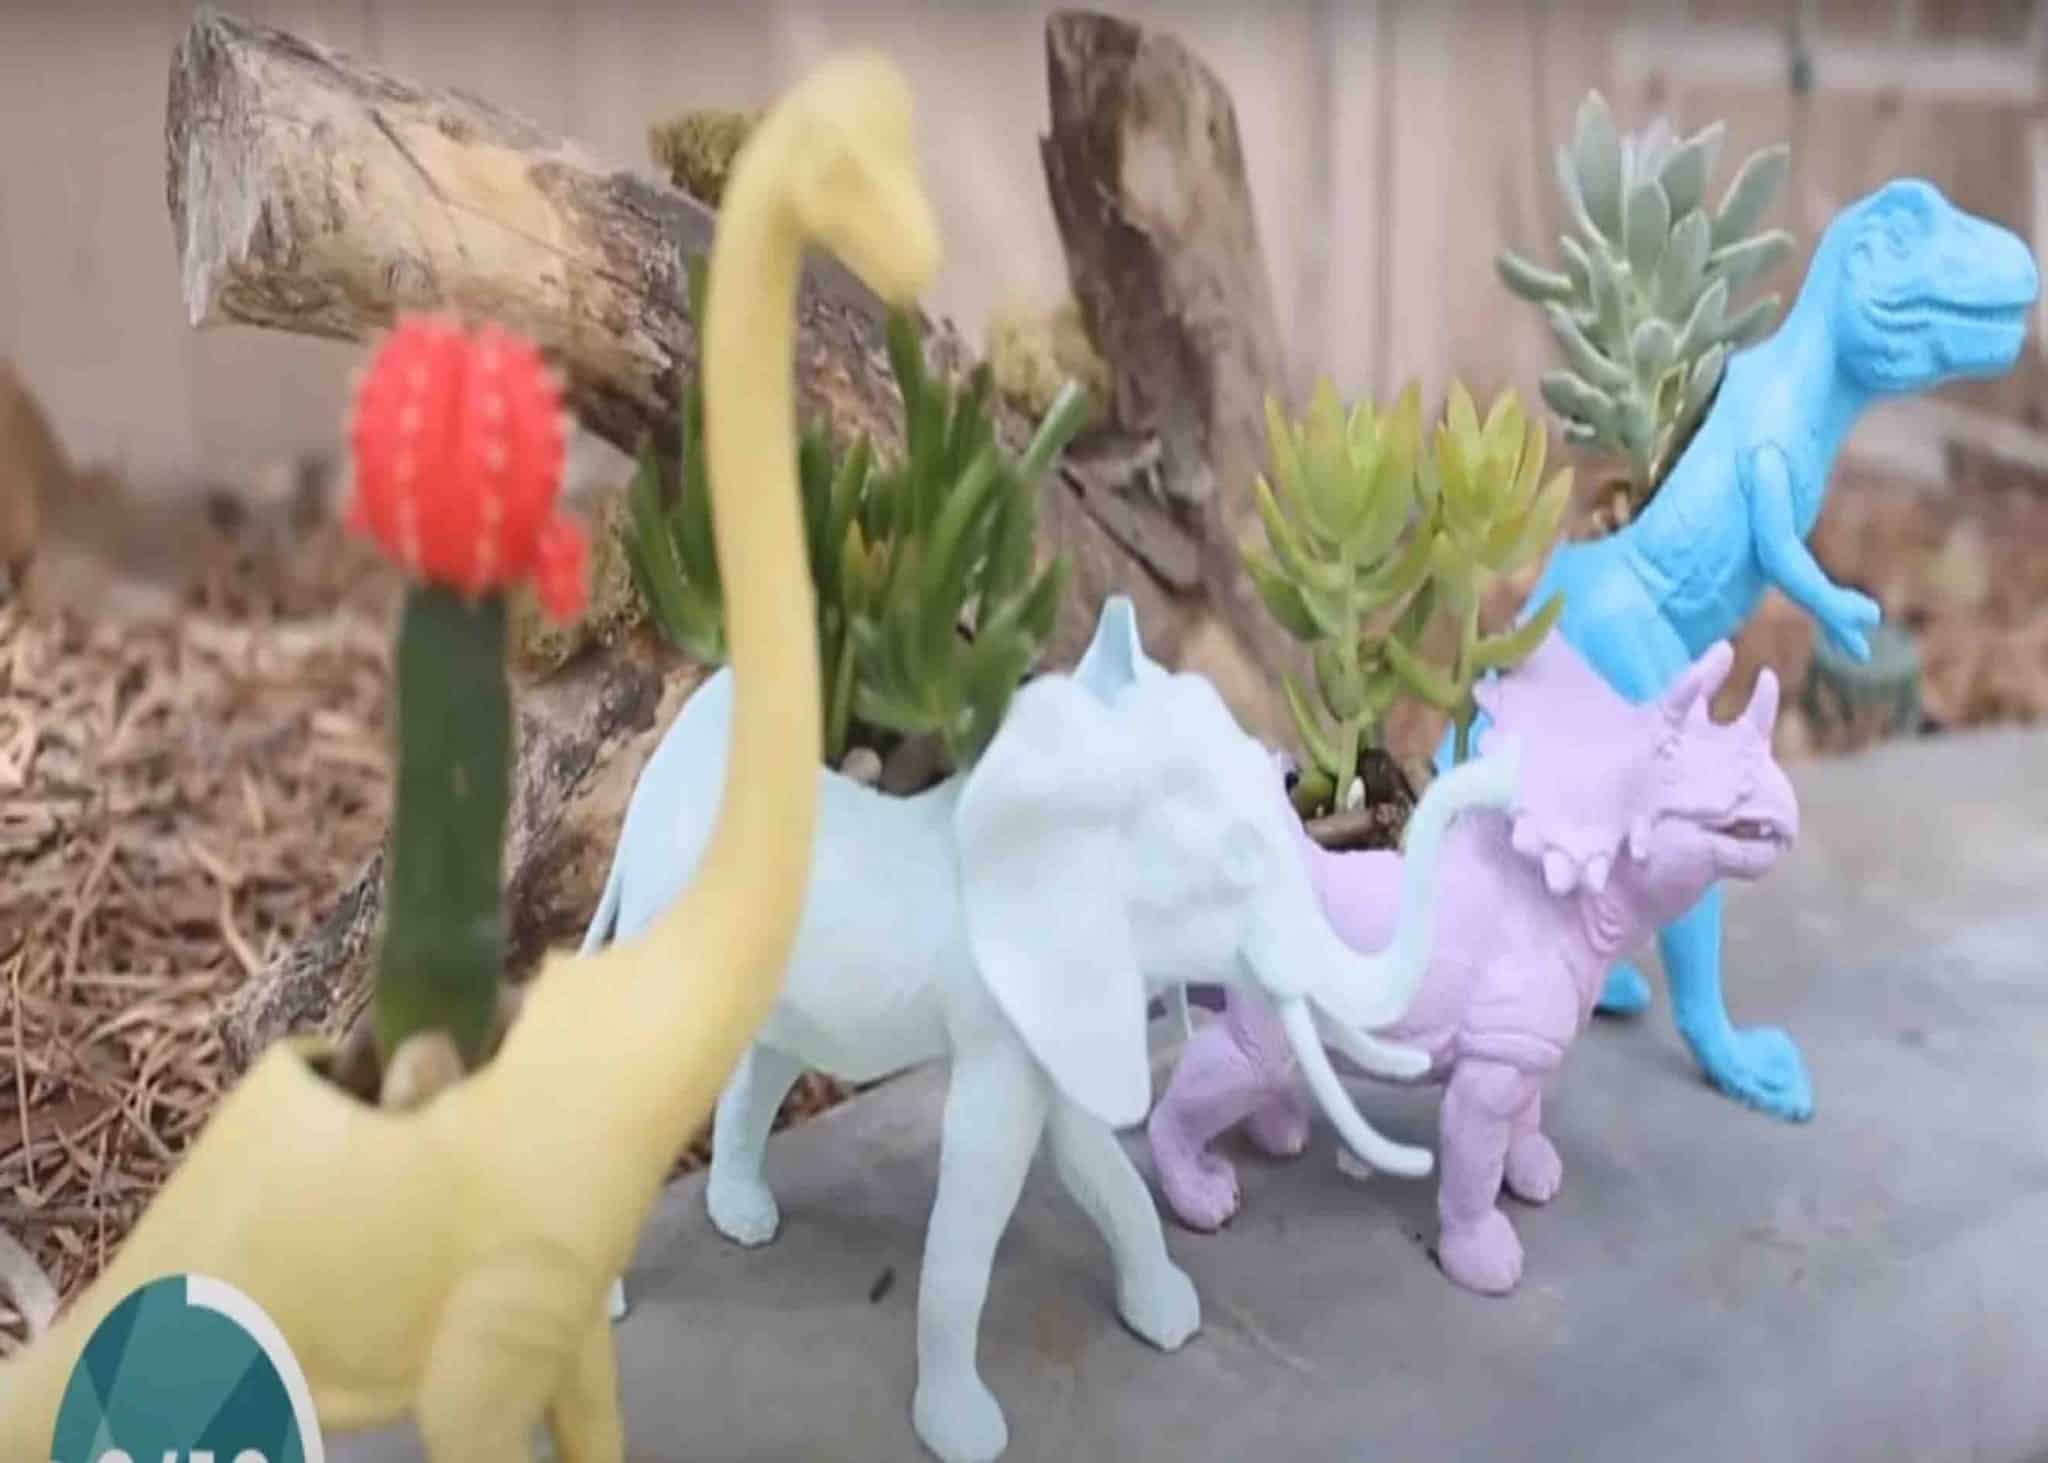 Repurposed toy animals as planters